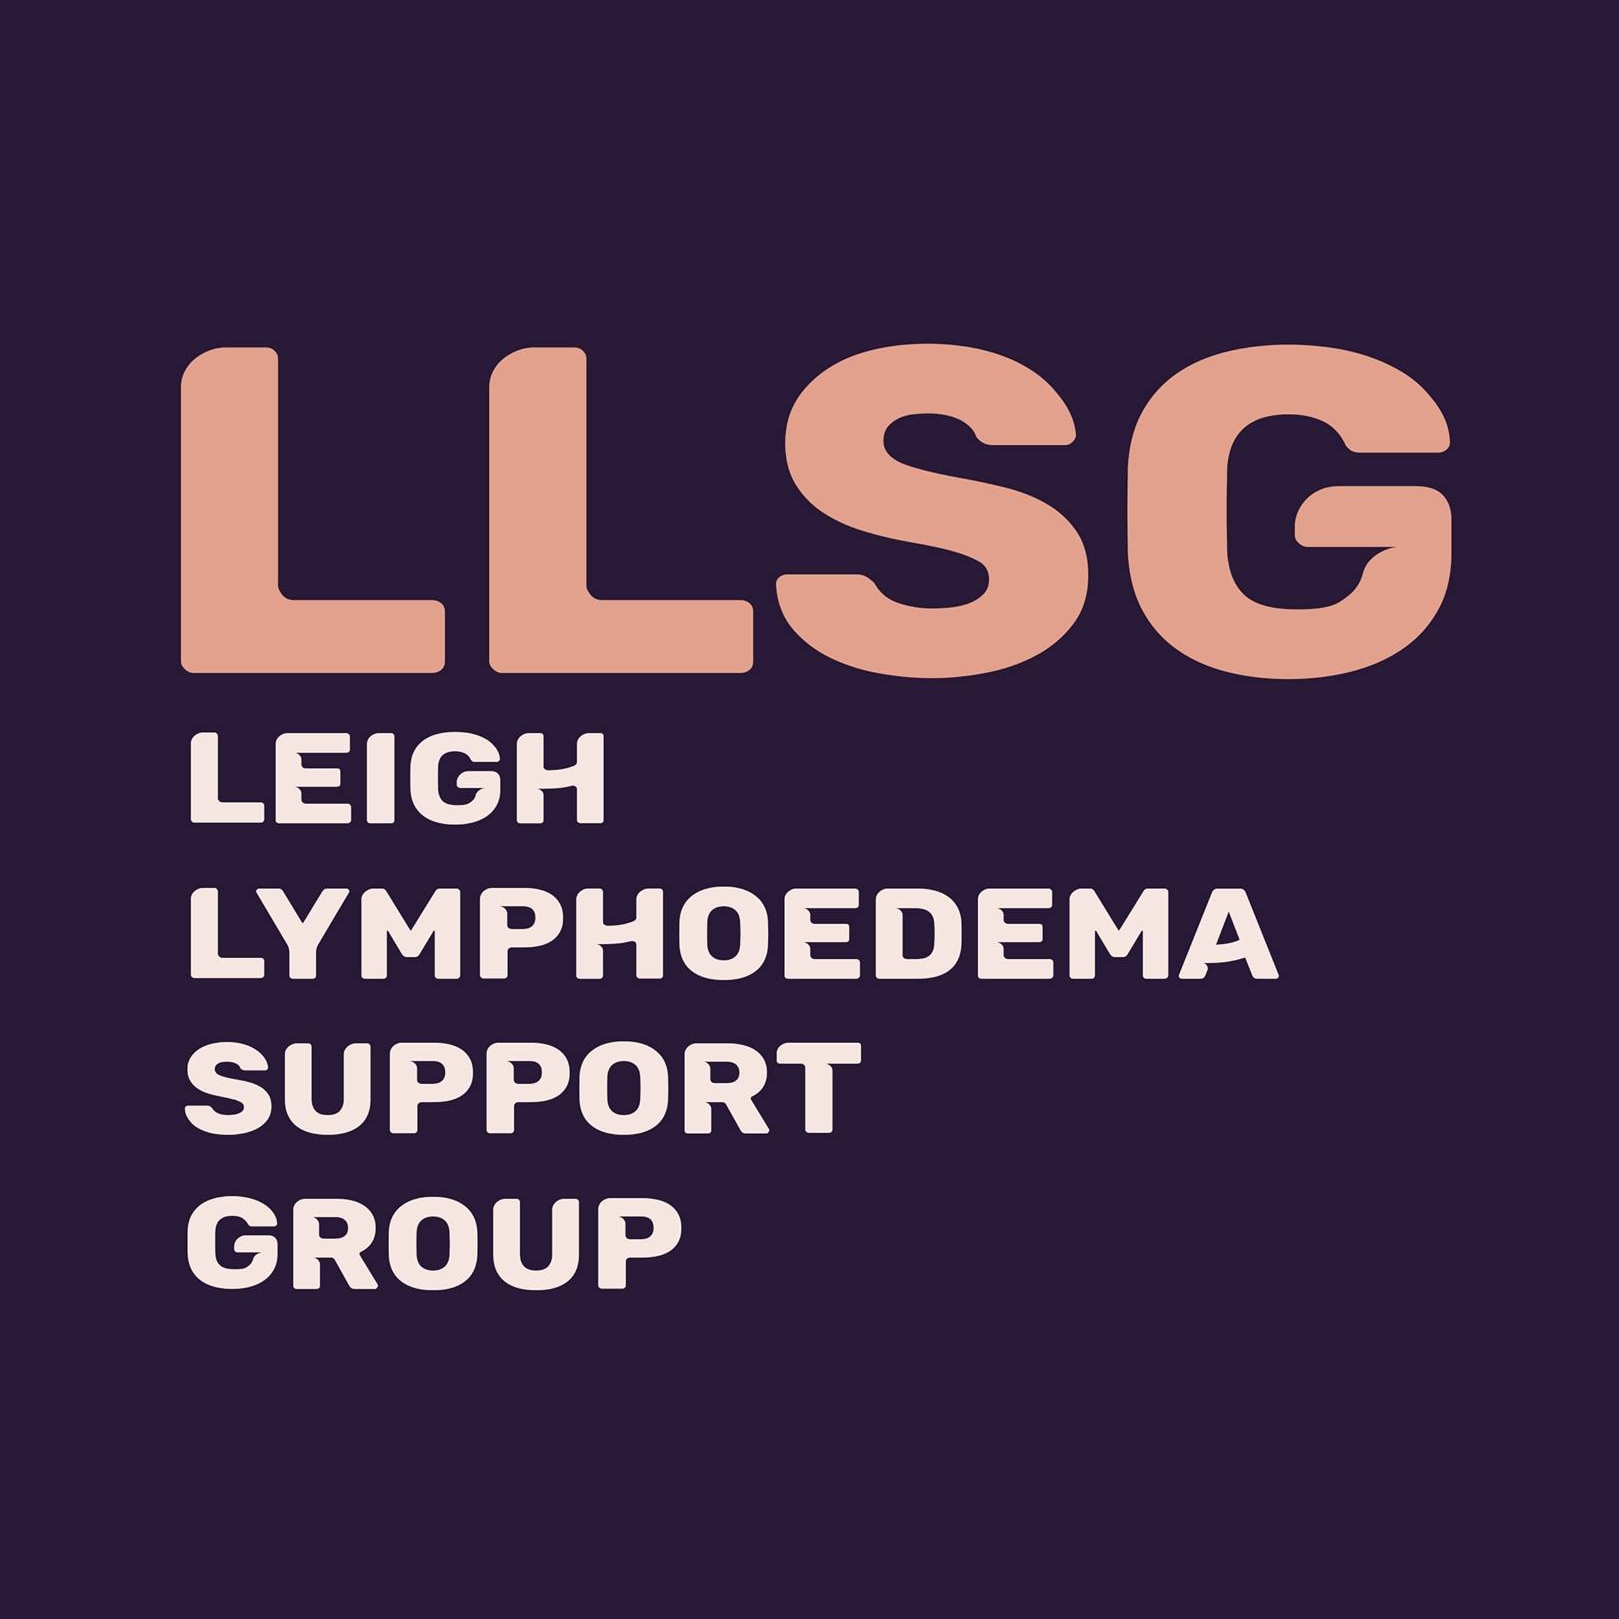 Leigh Lymphoedema Support Group